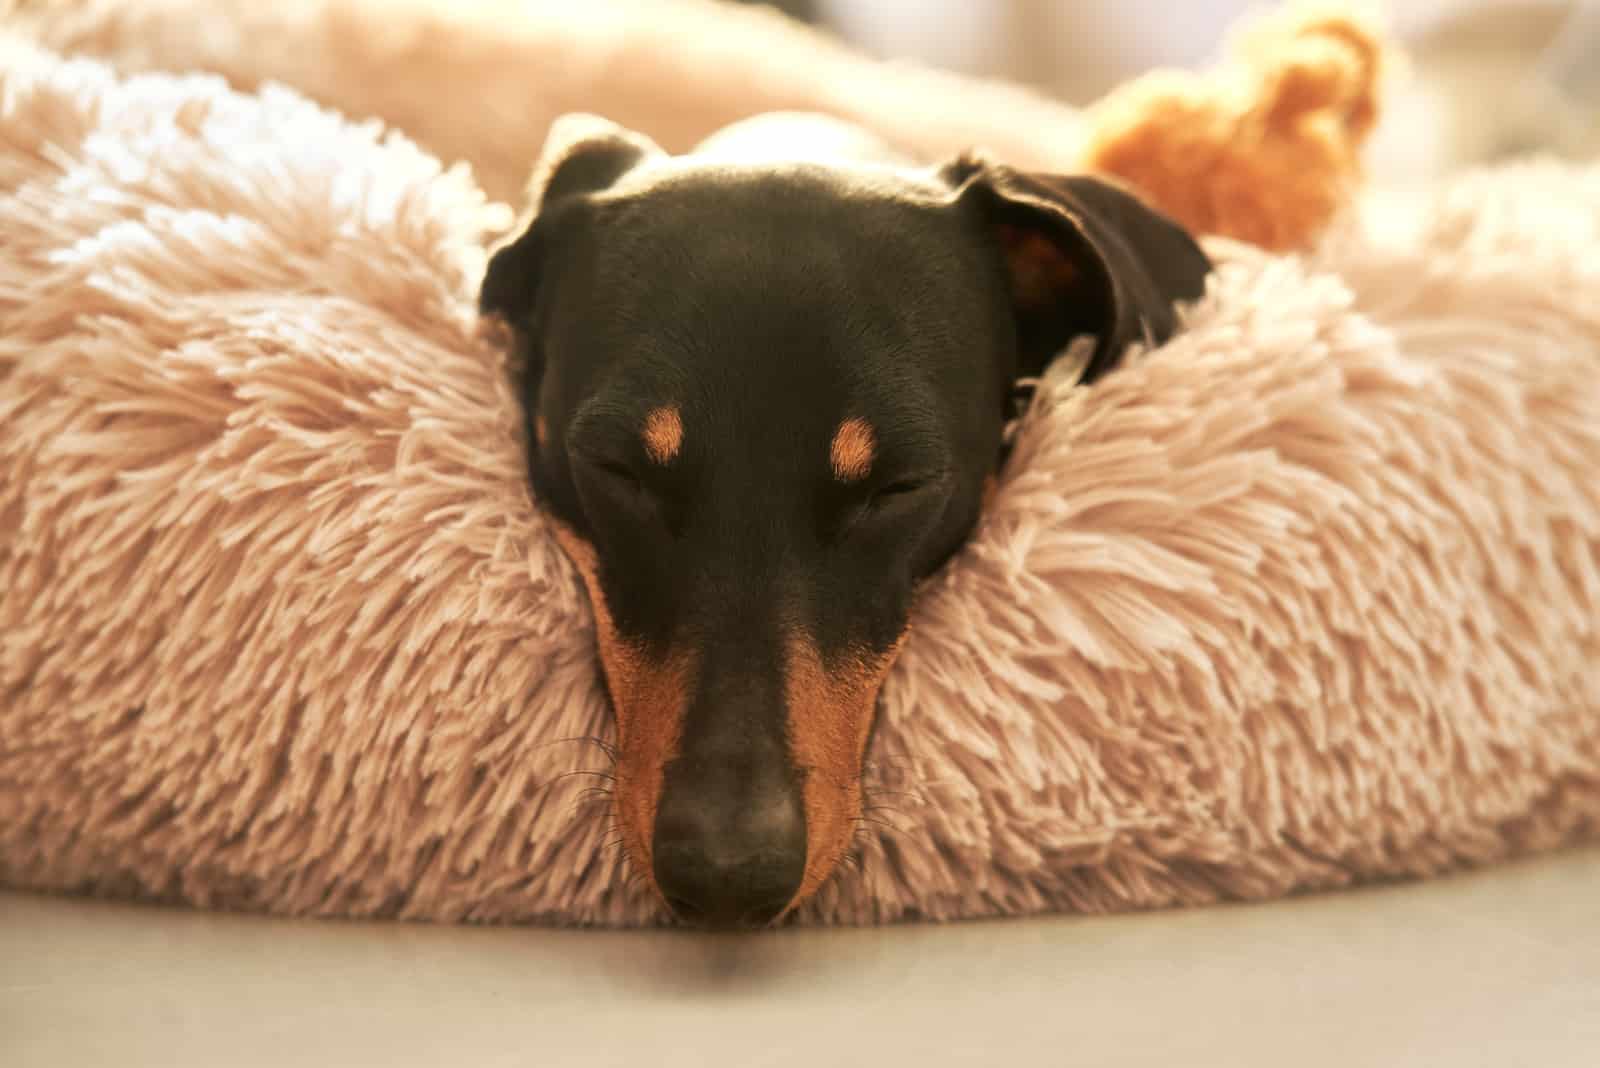 dachshund dog sleeping on the cozy mat